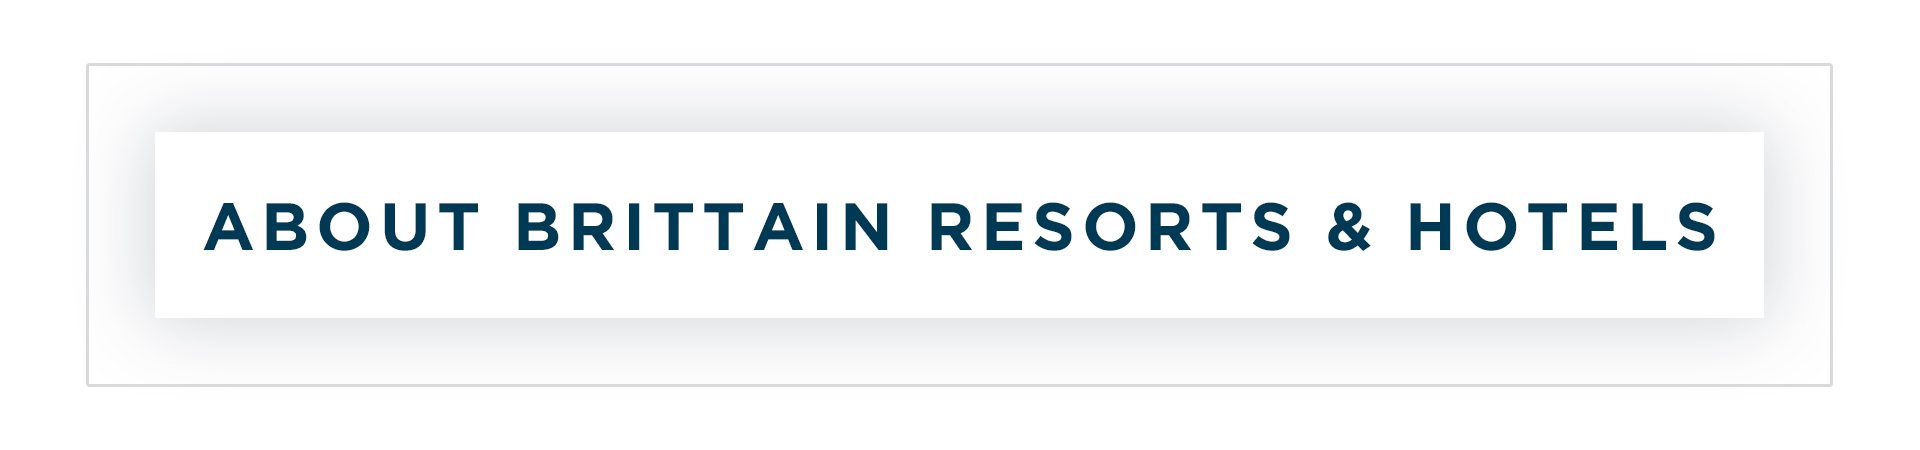 About Brittain Resorts & Hotels